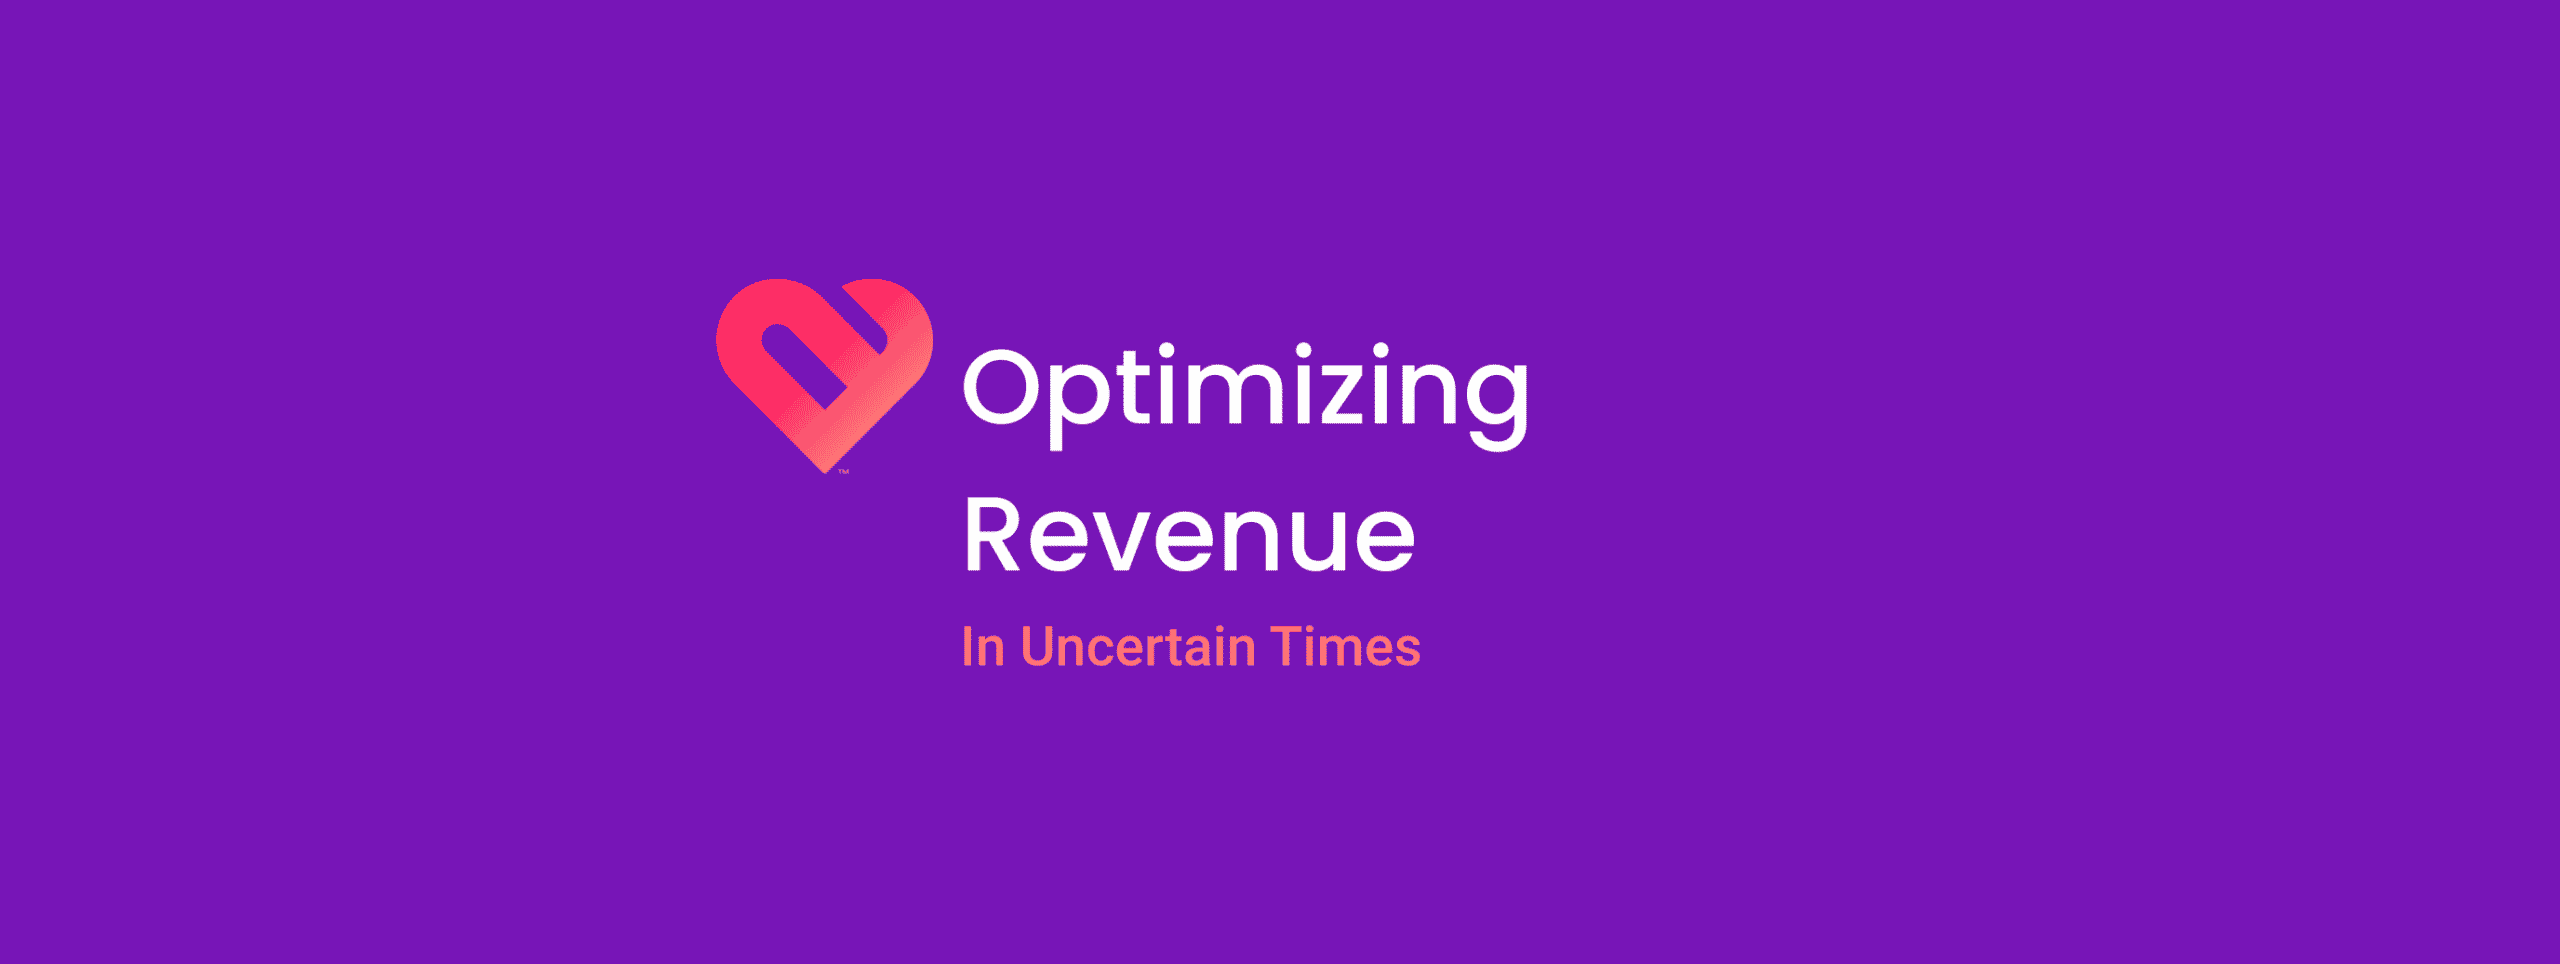 opimizing revenue webinar header